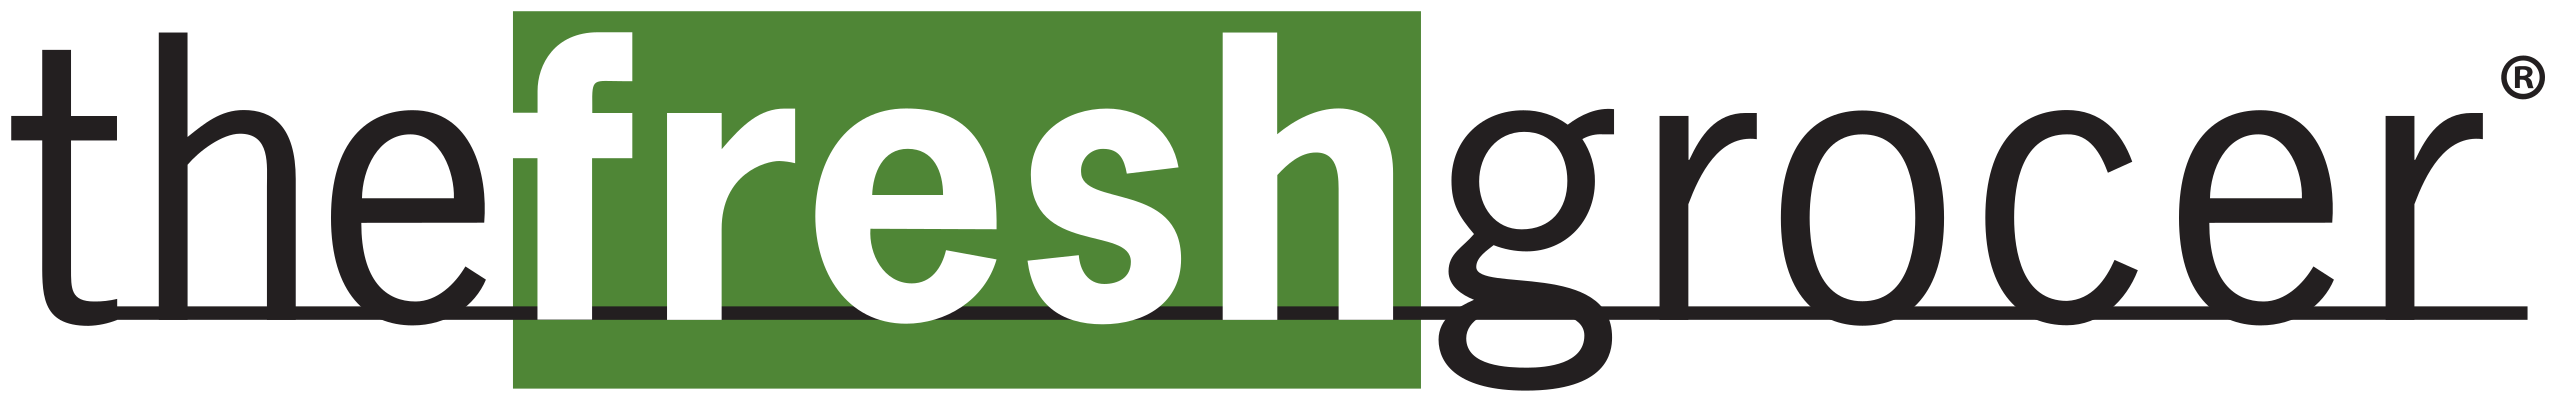 The_Fresh_Grocer_logo